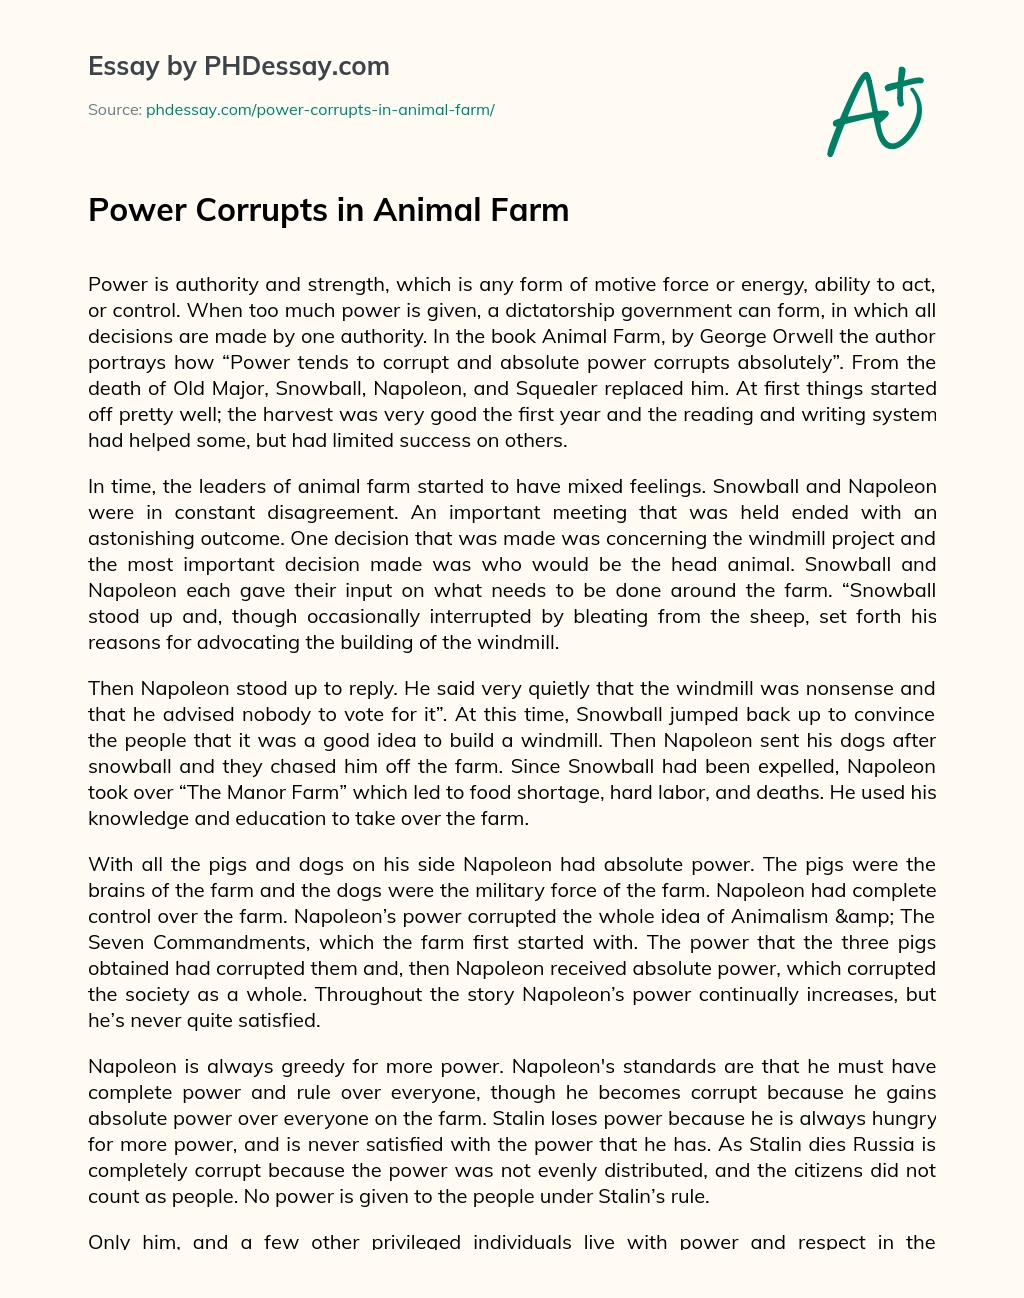 animal farm essay power corrupts